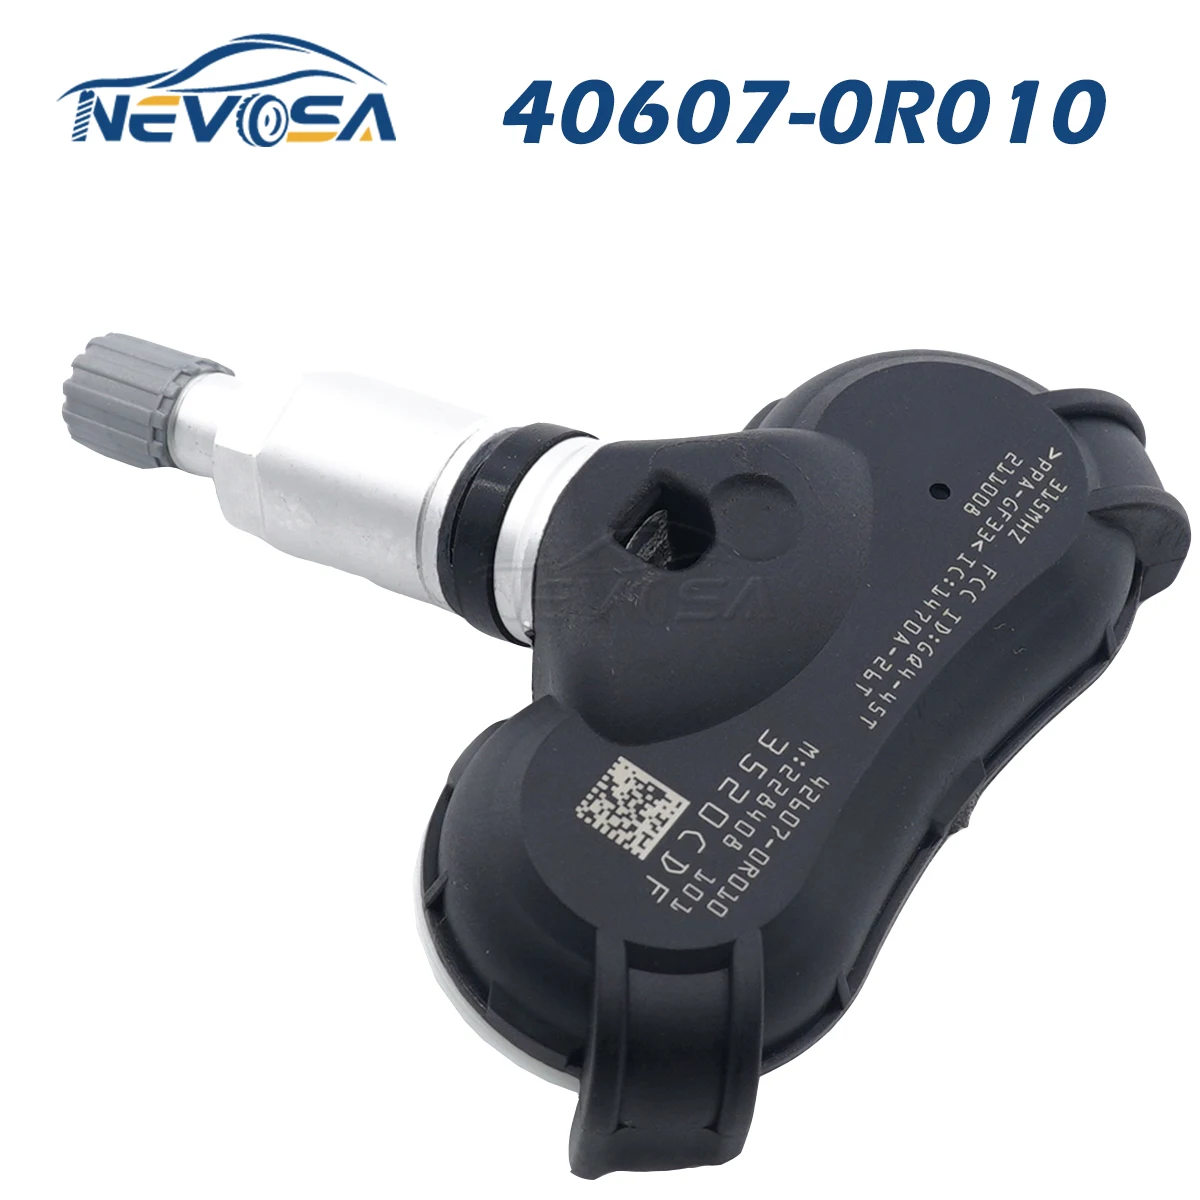 

NEVOSA TPMS Tire Air Pressure Monitor Sensor For Toyota Highlander 2014-2019 Rav4 2013-2019 315MHz 426070R010 42607-0R010